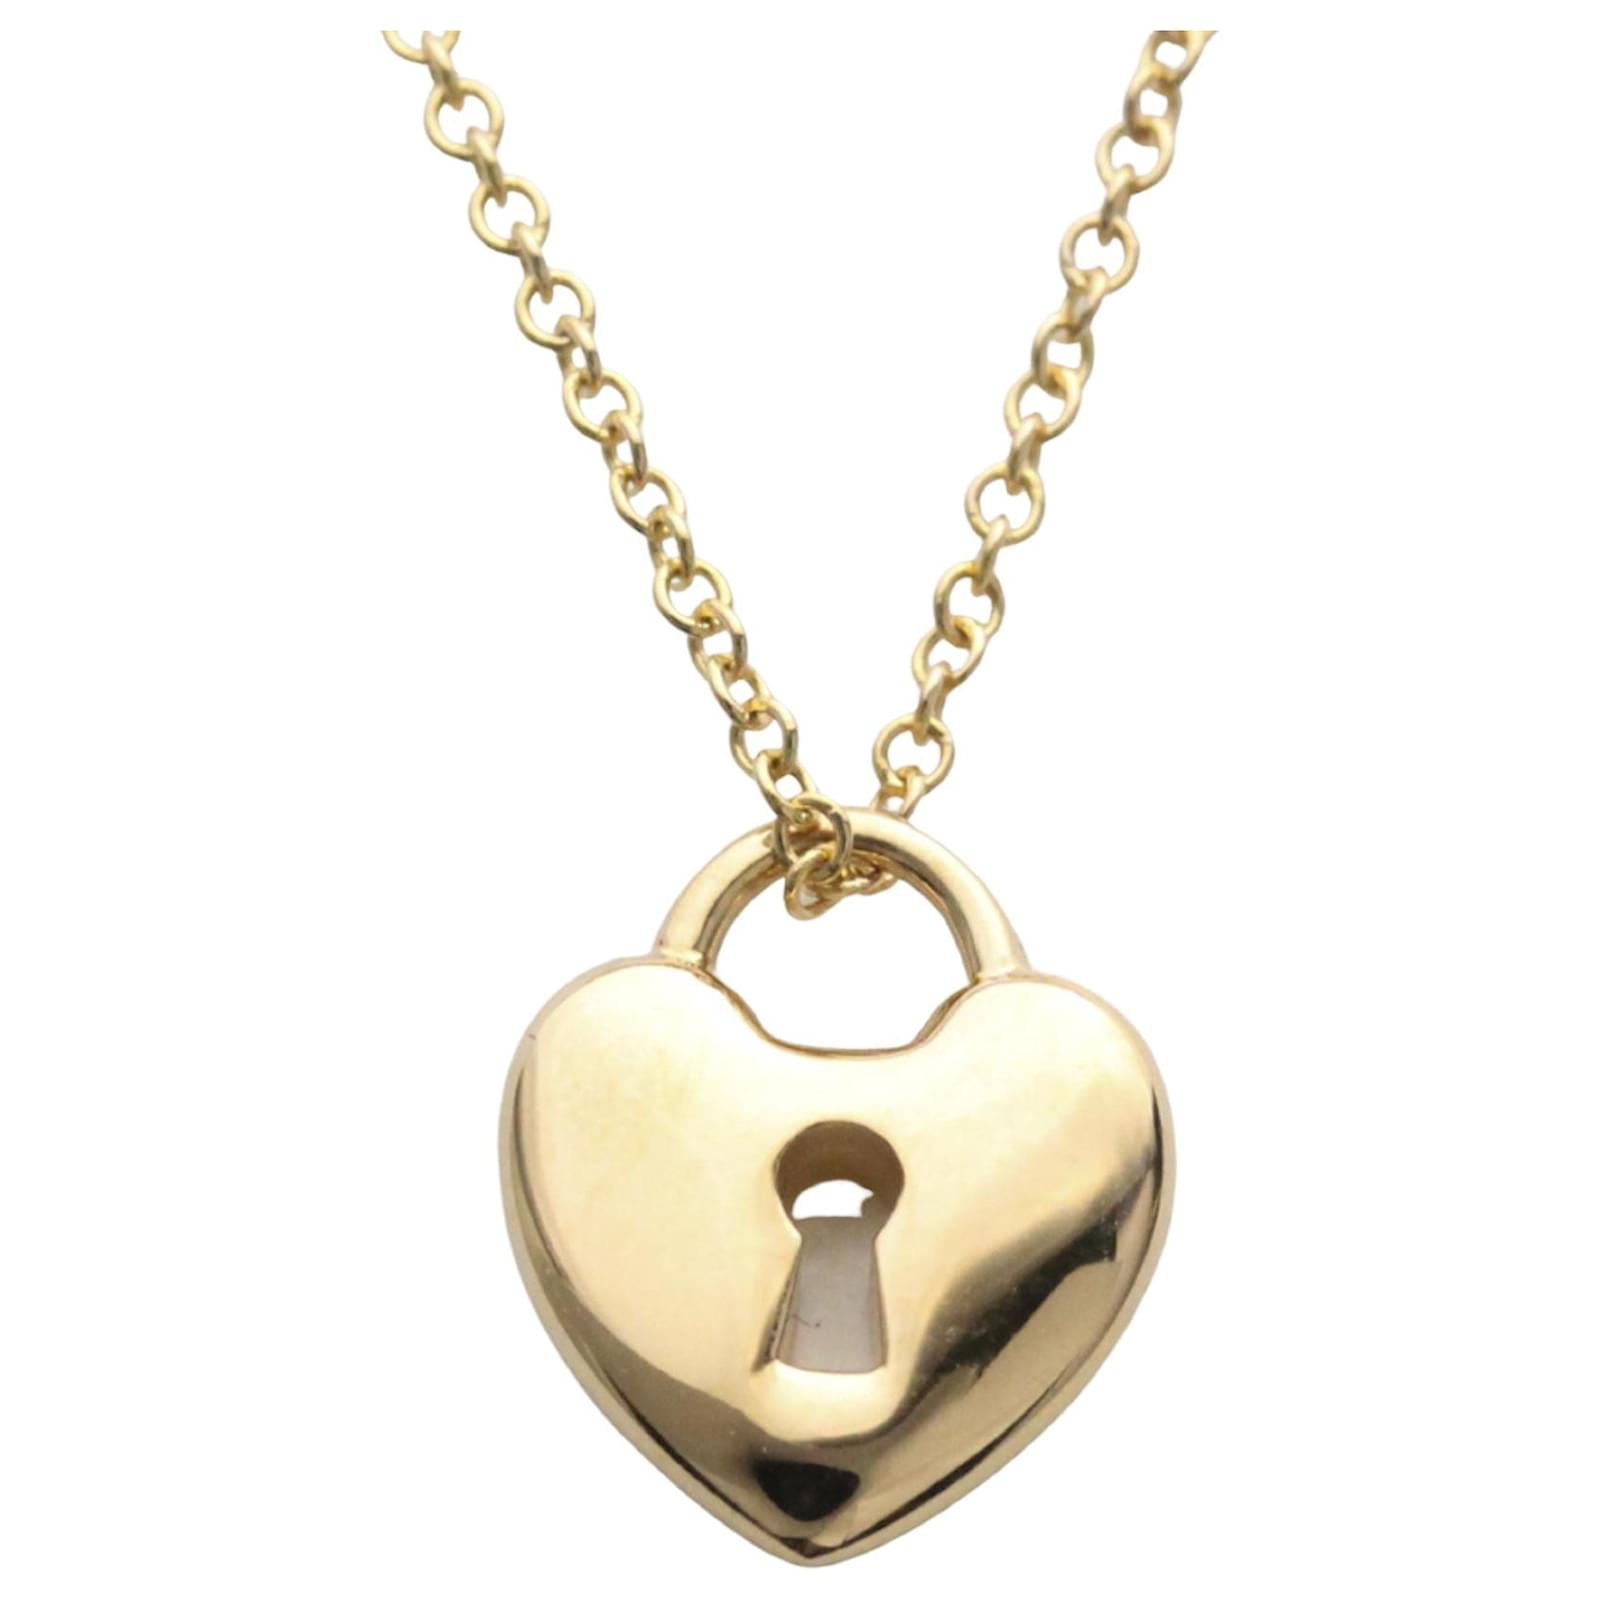 tiffany lock necklace gold